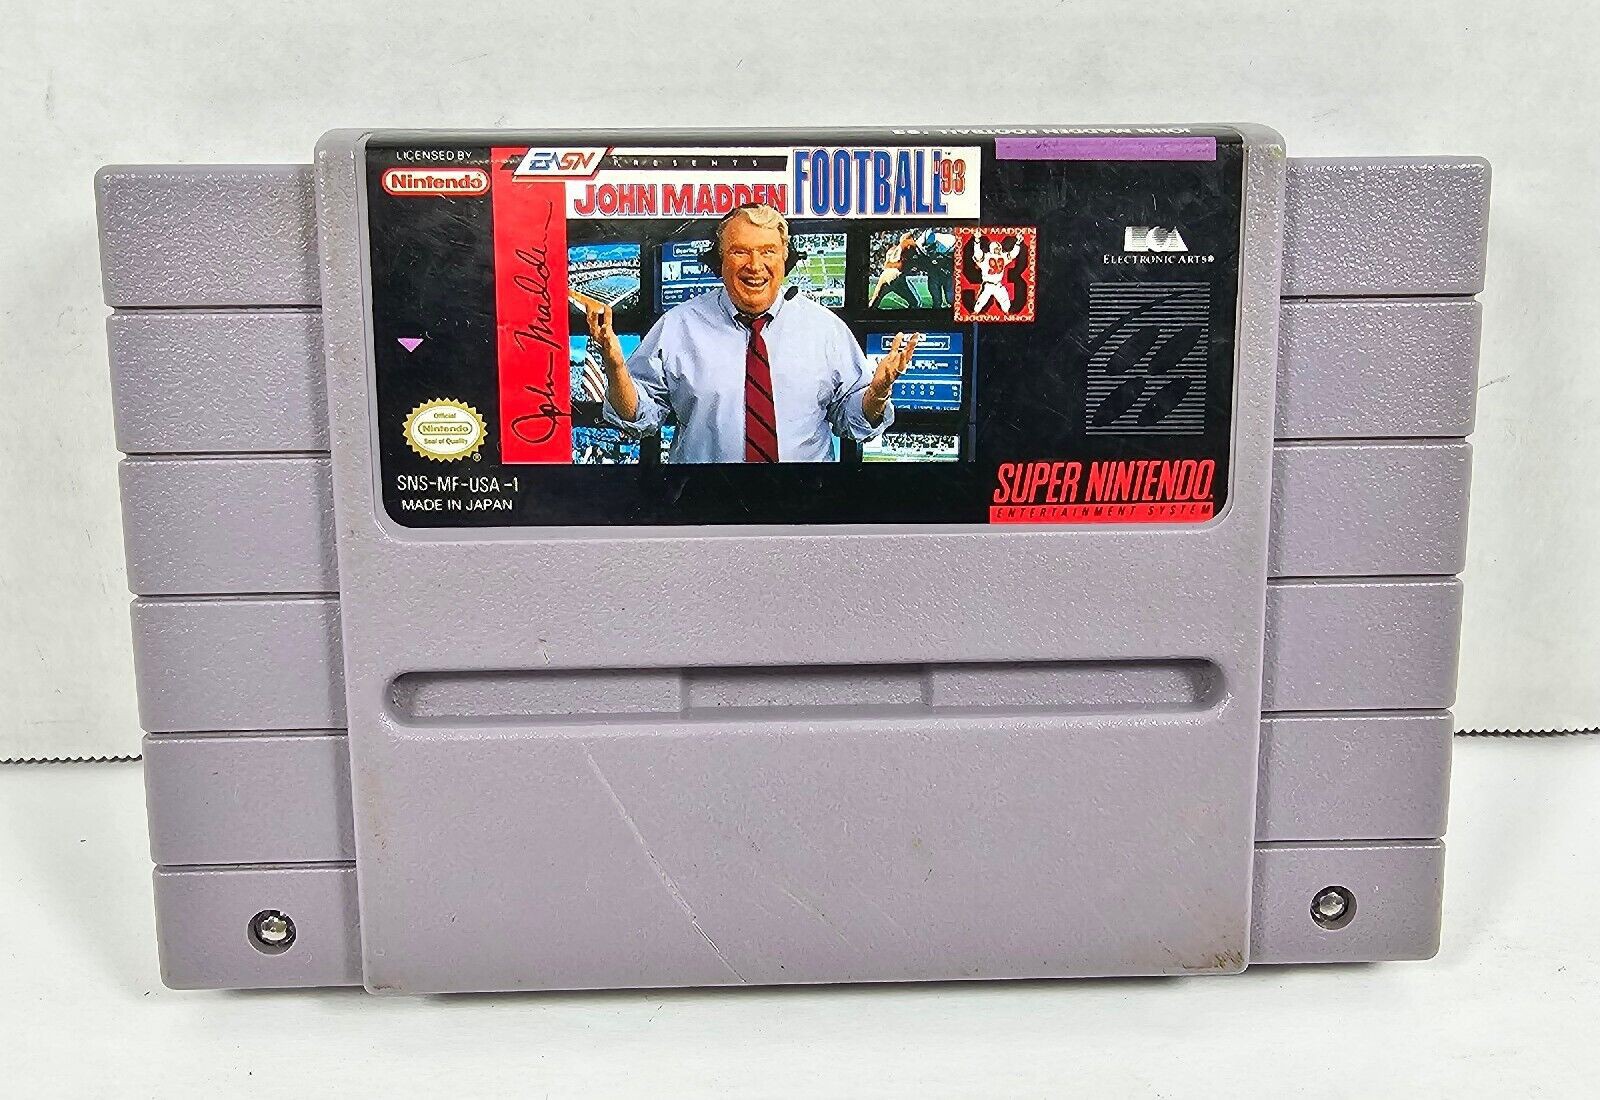 John Madden Footbal '93 (NTSC) Kopen | Super Nintendo Games